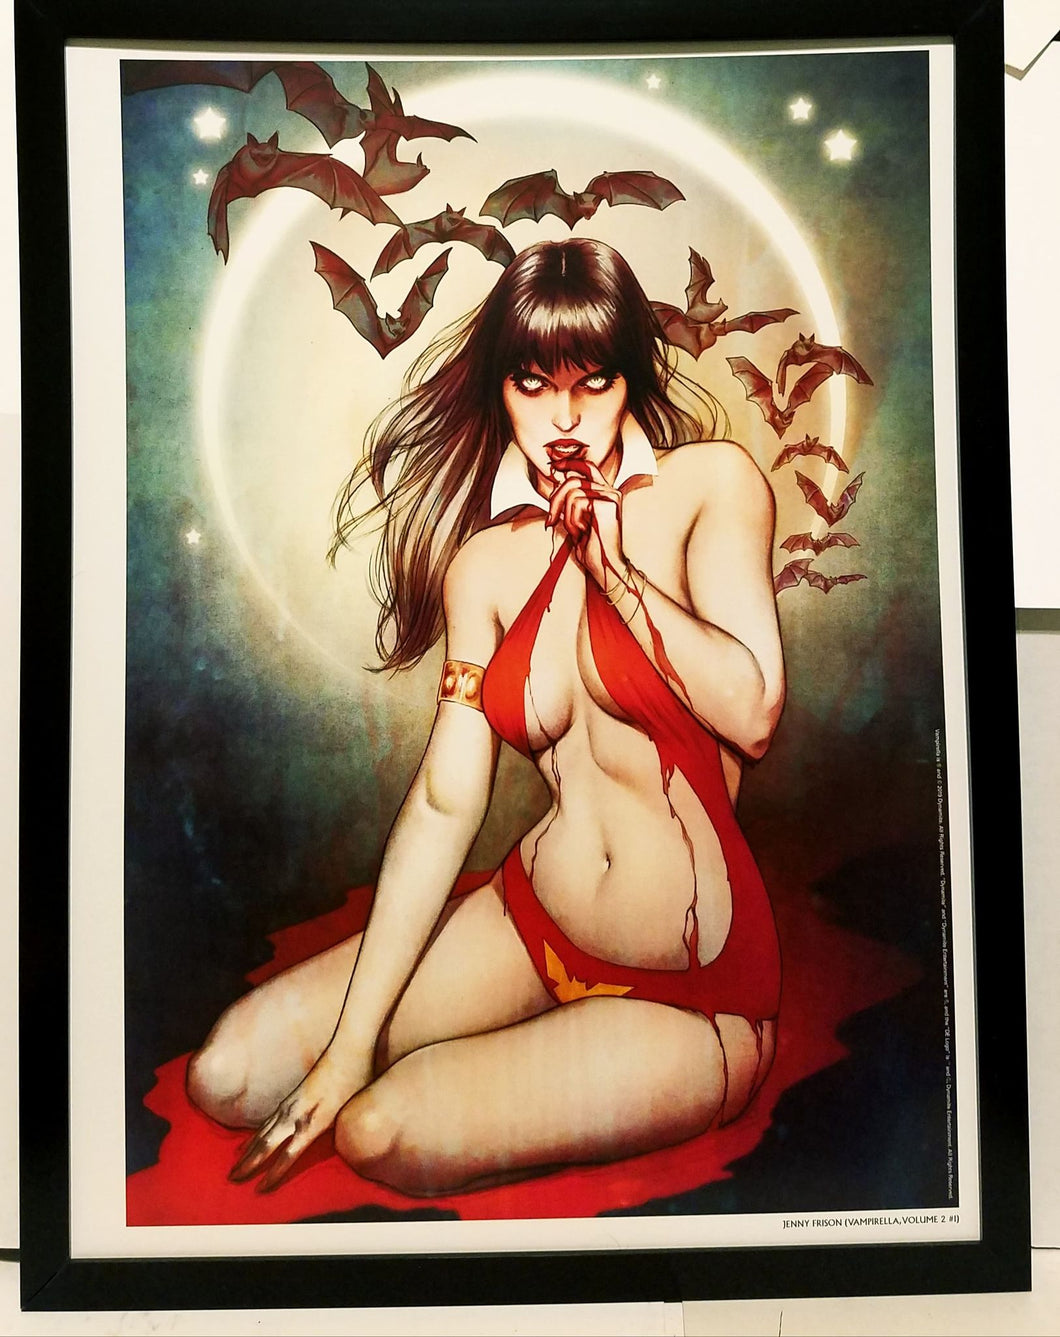 Vampirella 12x16 FRAMED Art Print by Jenny Frison (from #1) NEW comic poster